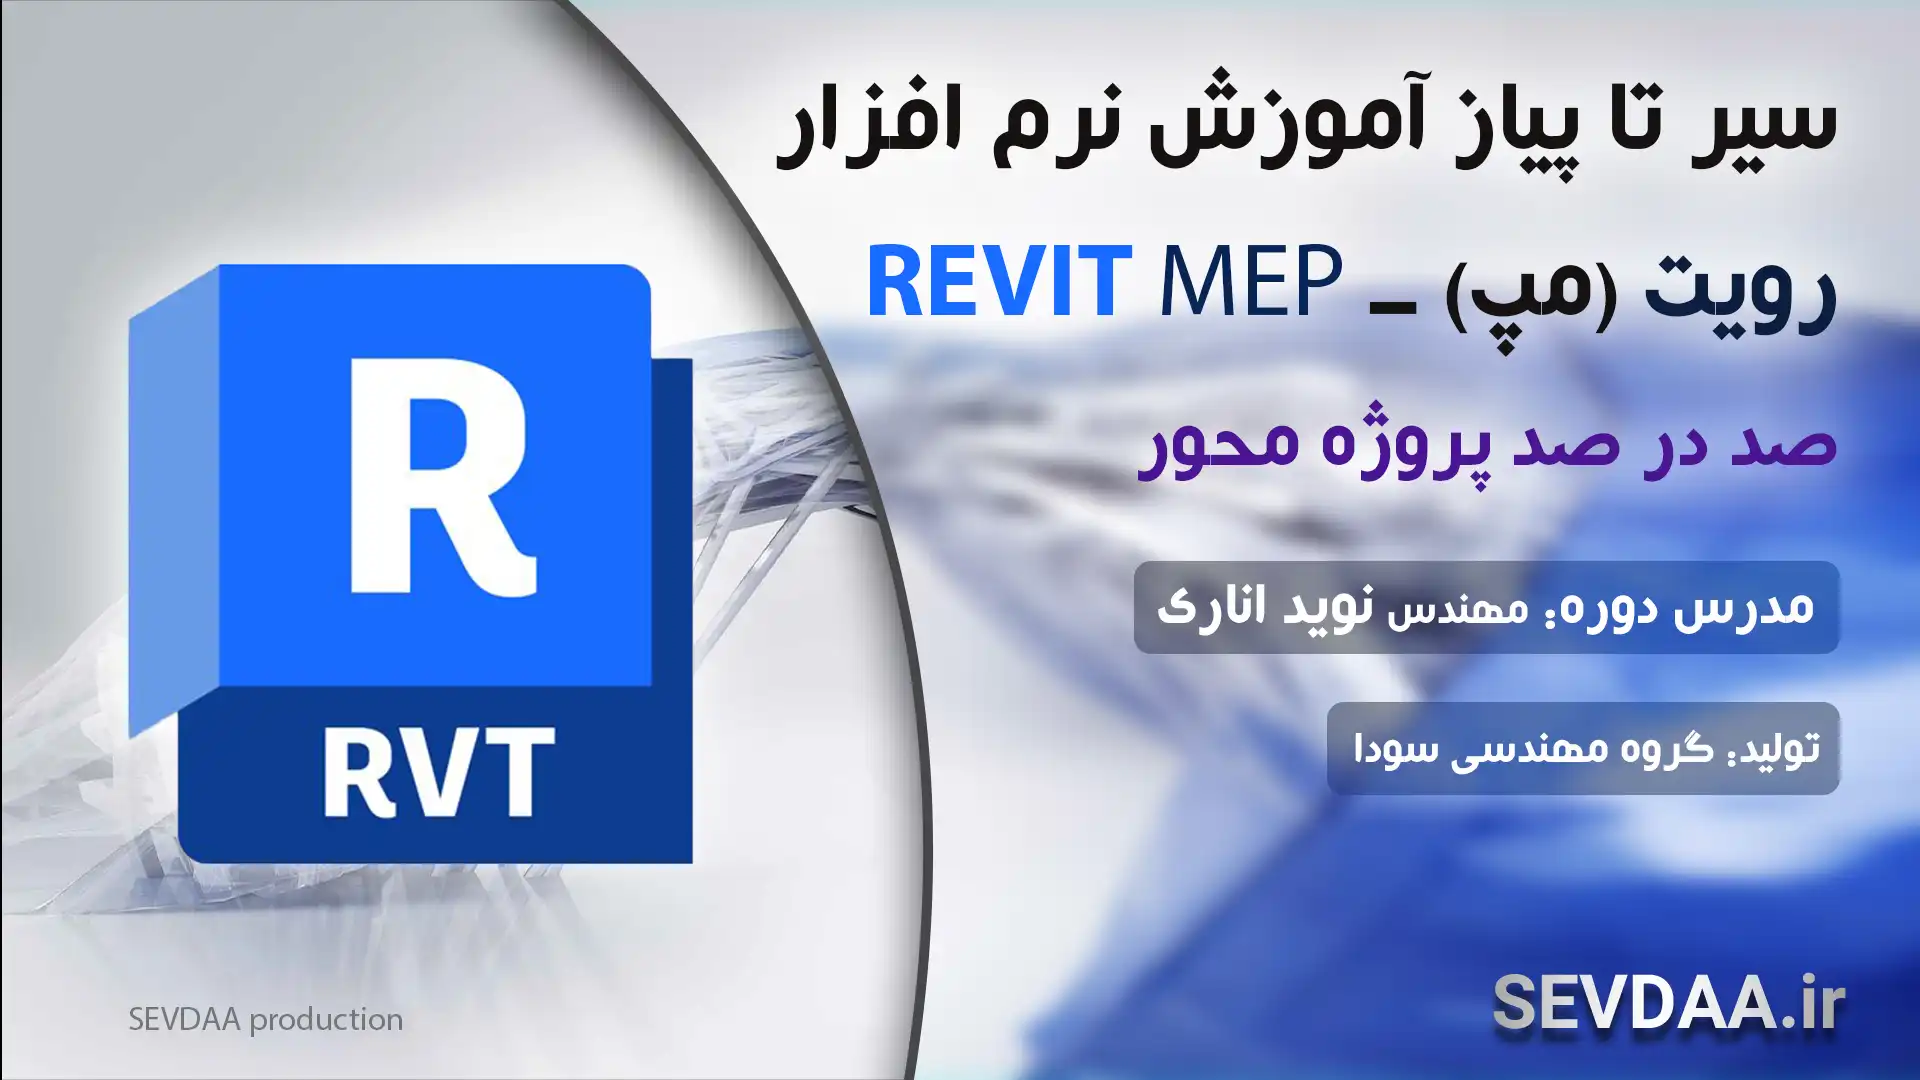 پکیج آموزشی رویت مپ تاسیسات مکانیکی (پروژه محور) - پکیج Revit MEP  تاسیسات مکانیکی